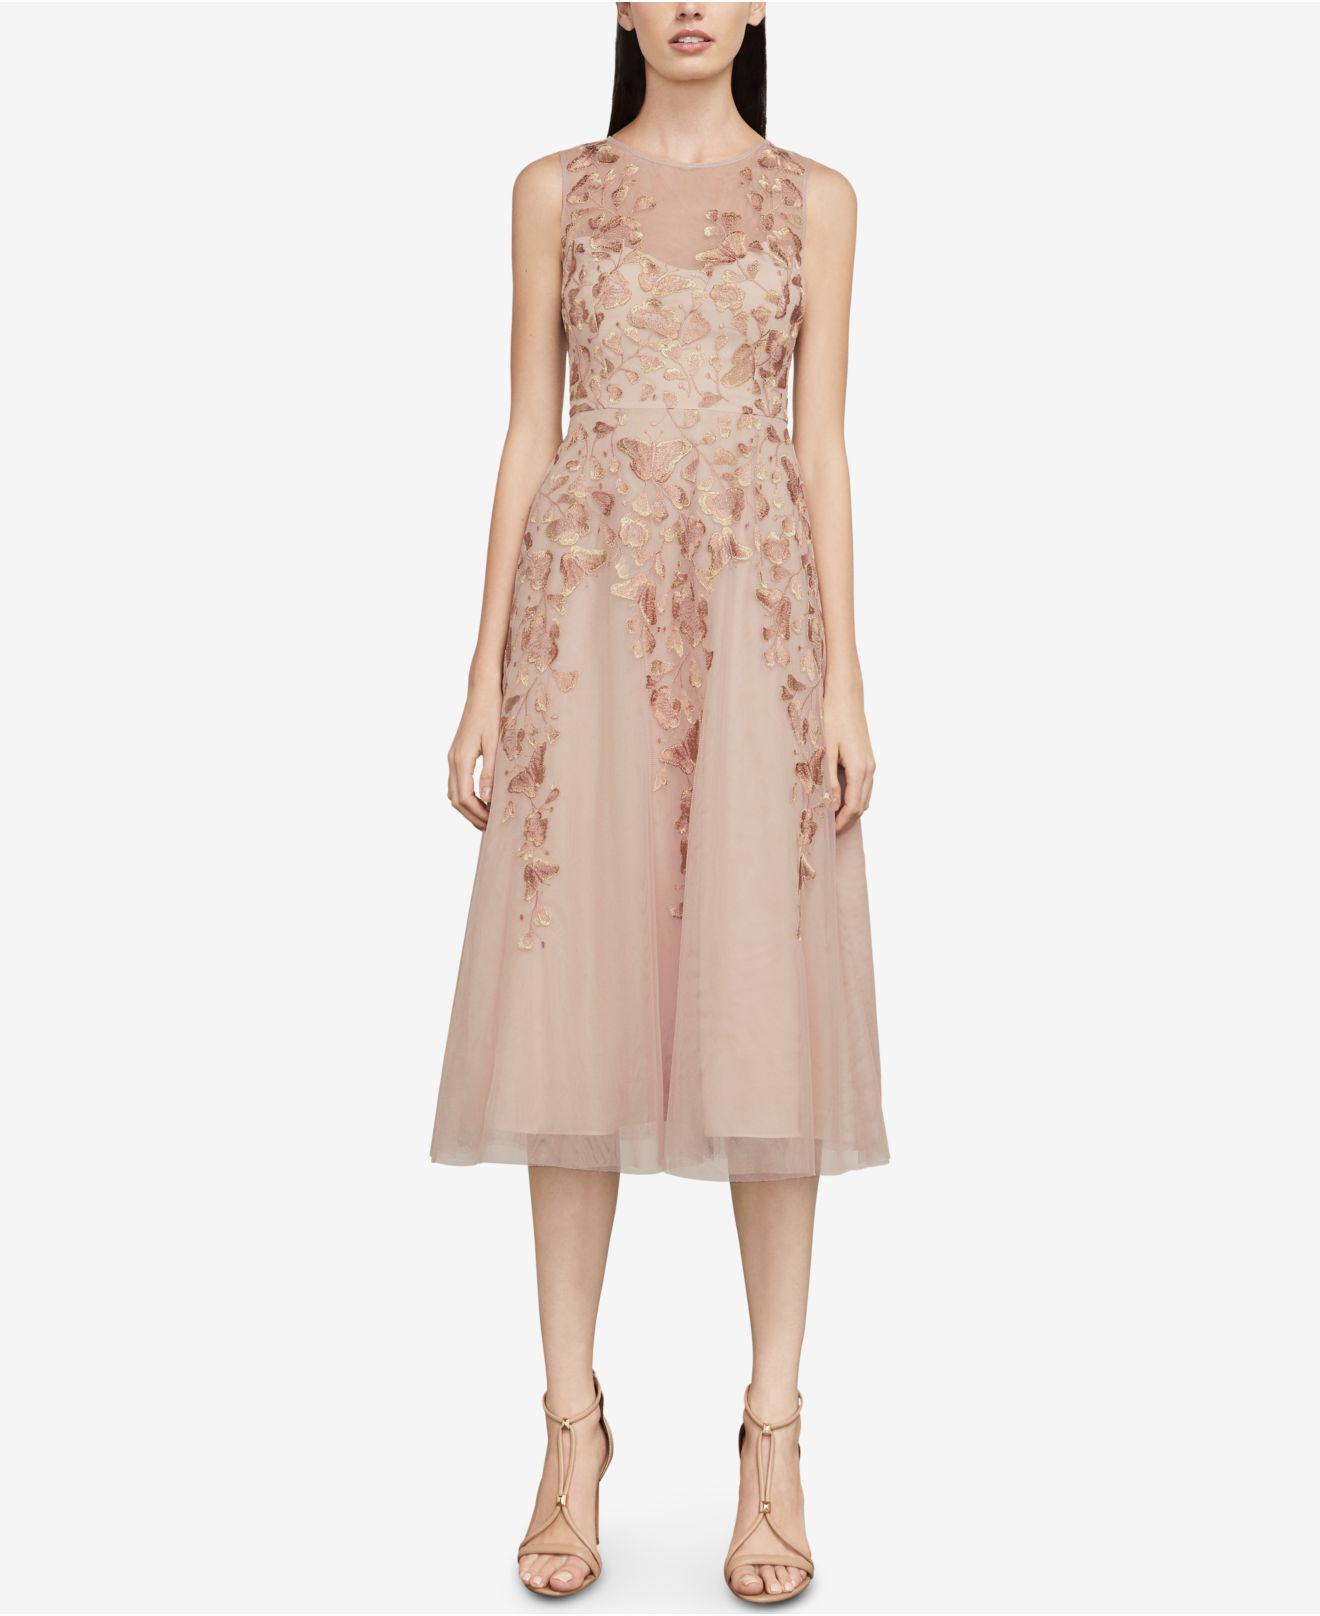 Bcbg Rose Gold Dress on Sale, 56% OFF | espirituviajero.com